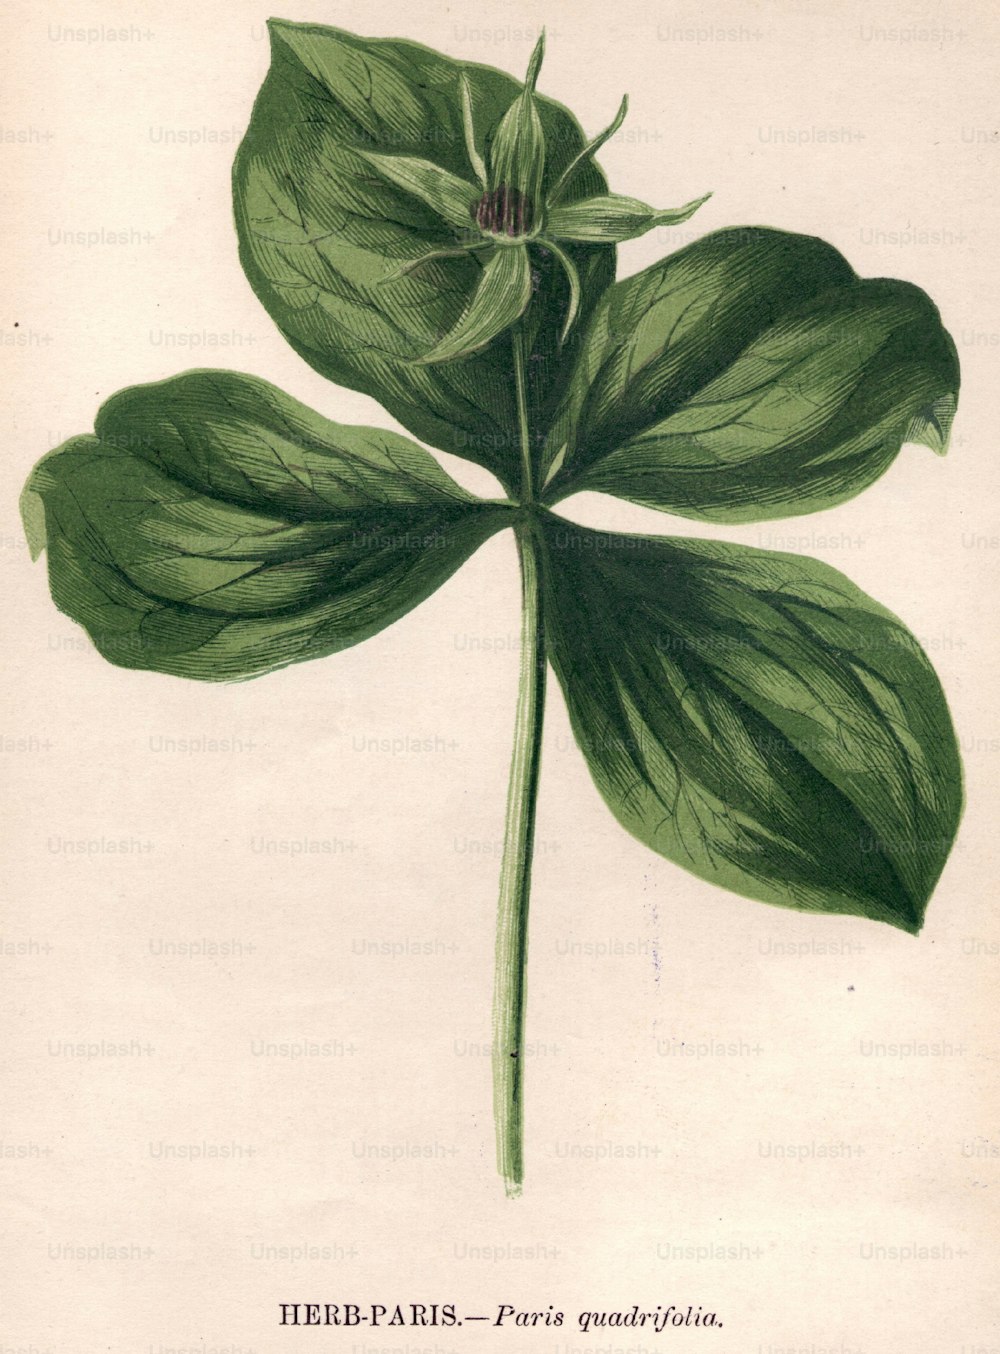 1800 circa: Paris quadrifolia, o herb paris (Foto di Hulton Archive/Getty Images)